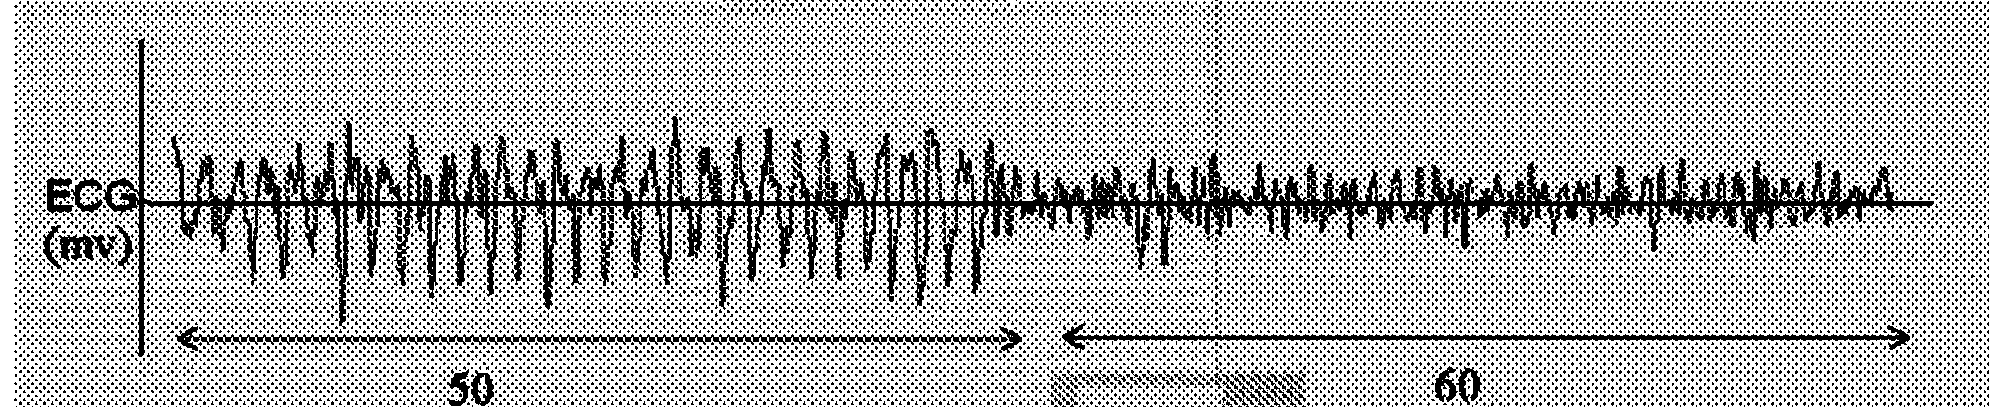 Method and apparatus for analyzing cardiac rhythm during CPR